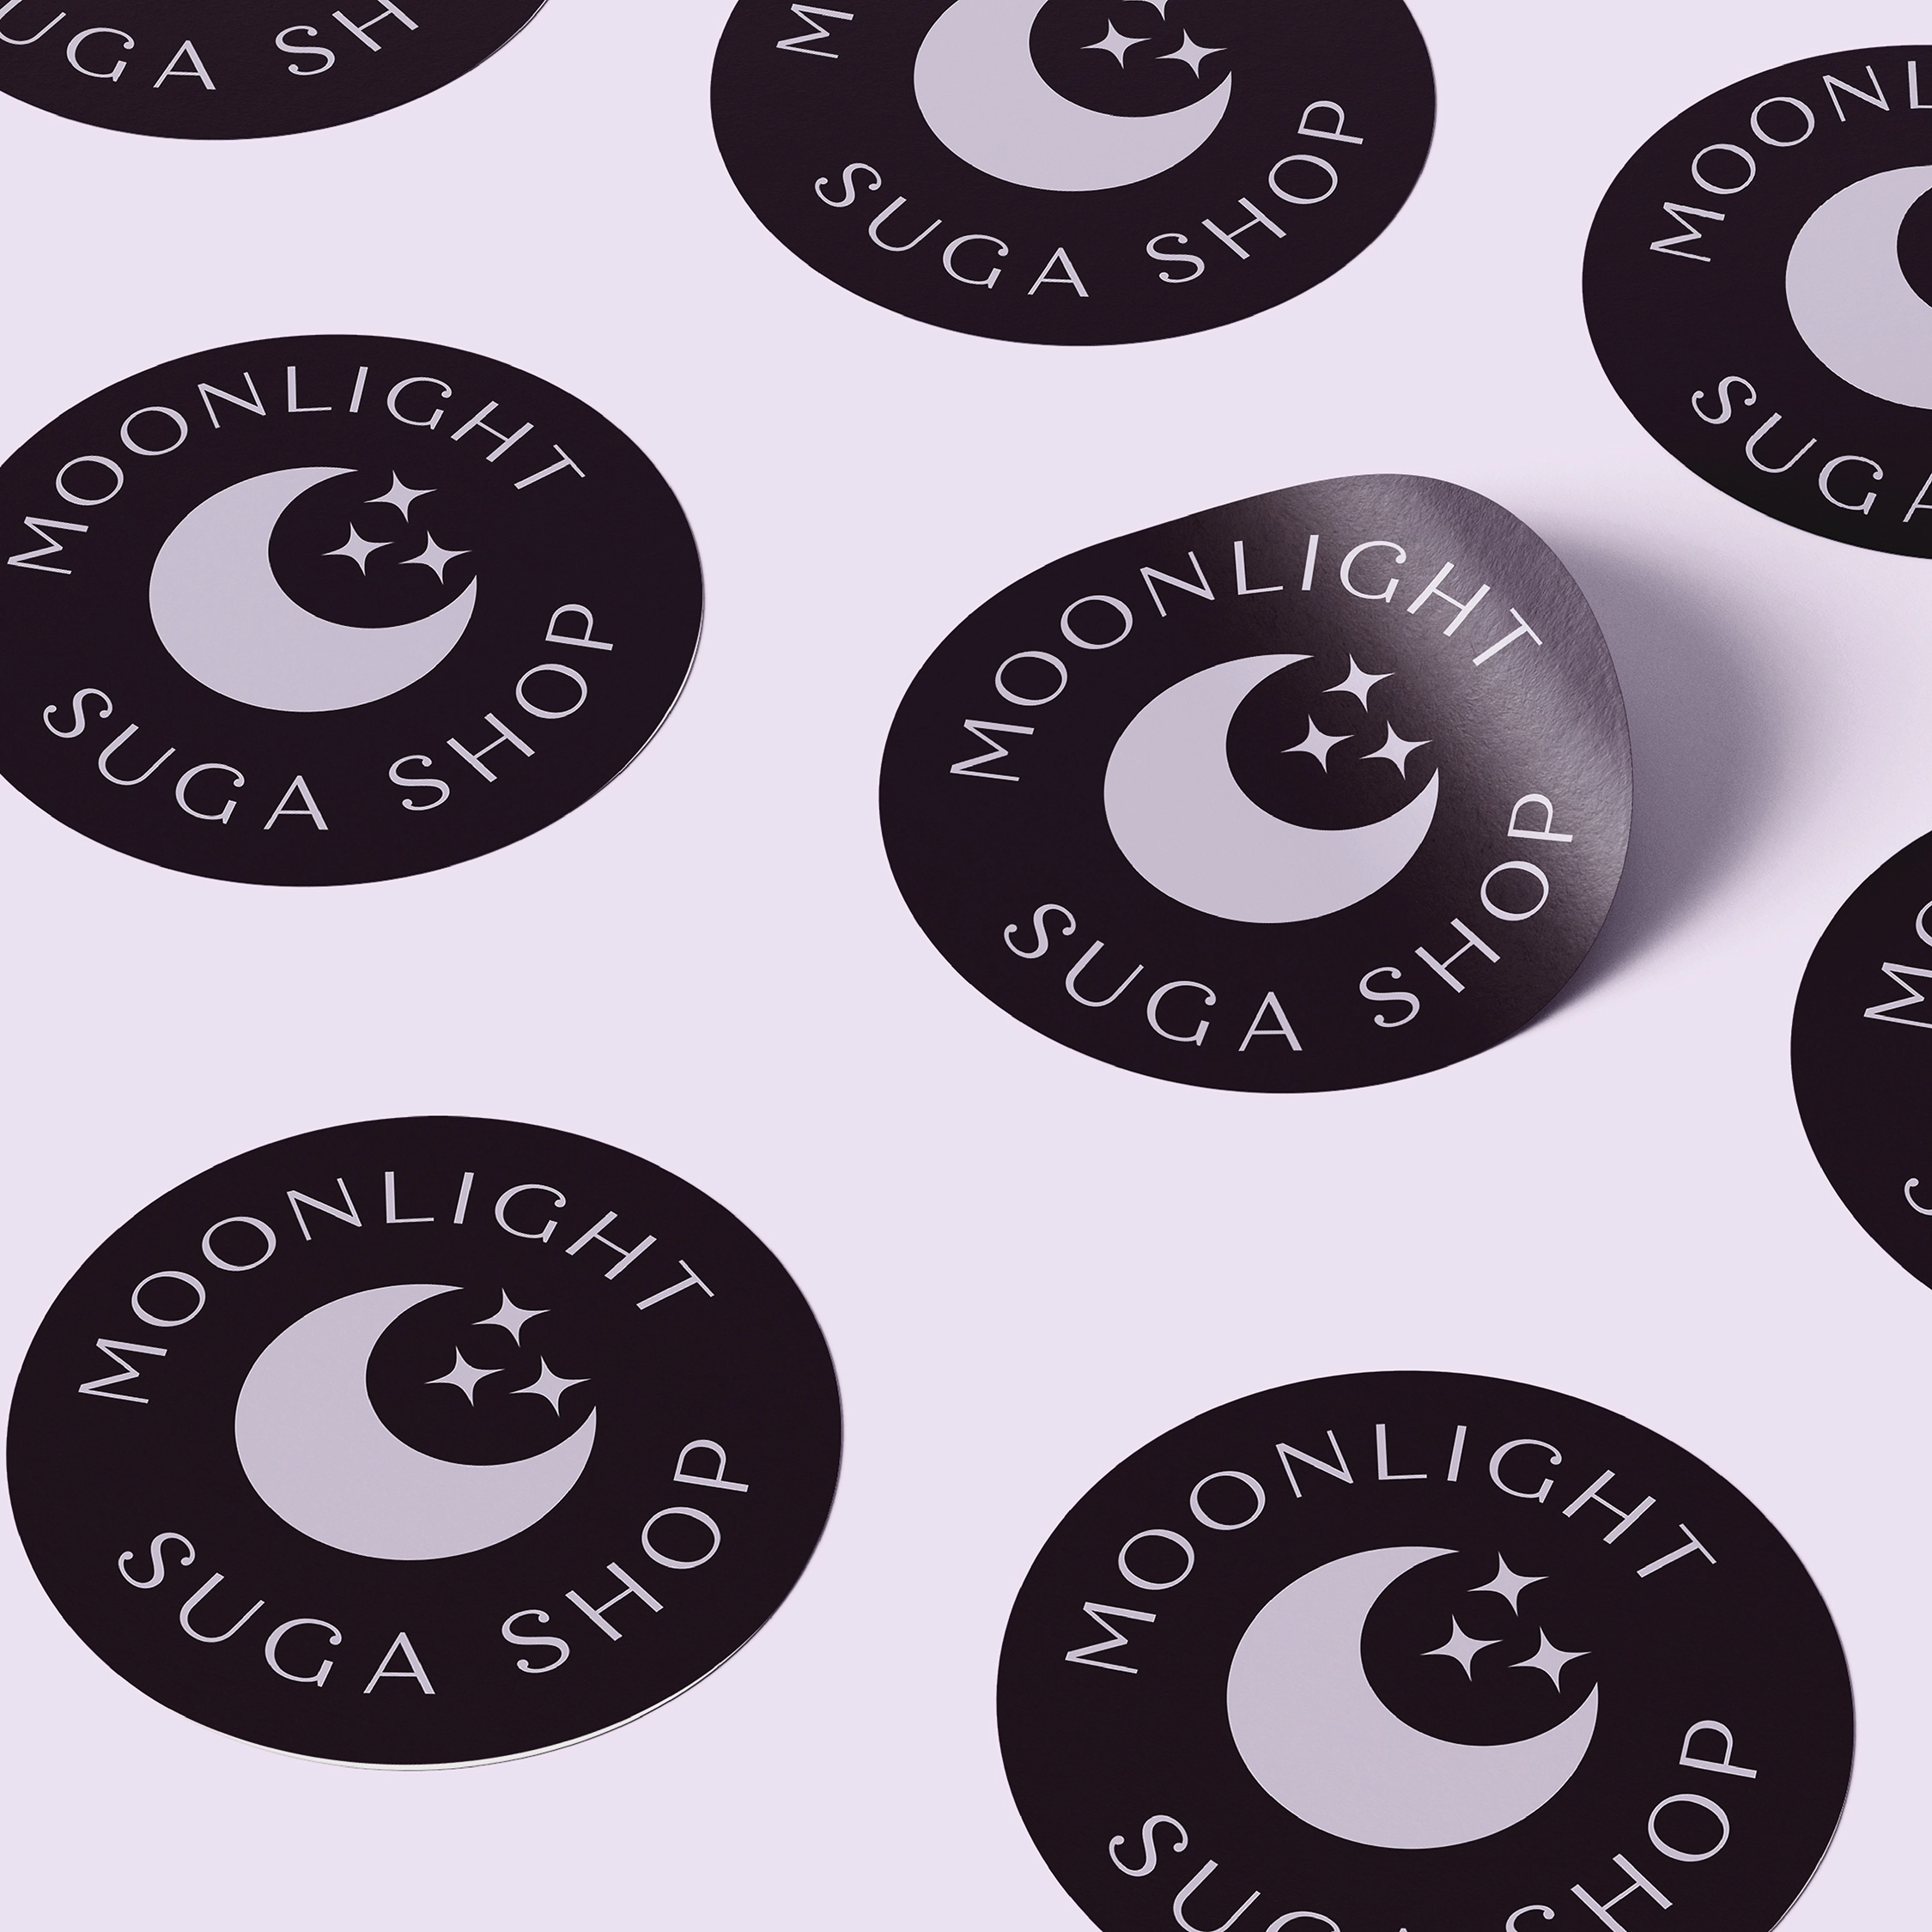 moonlight suga shop sticker kate chambers creative